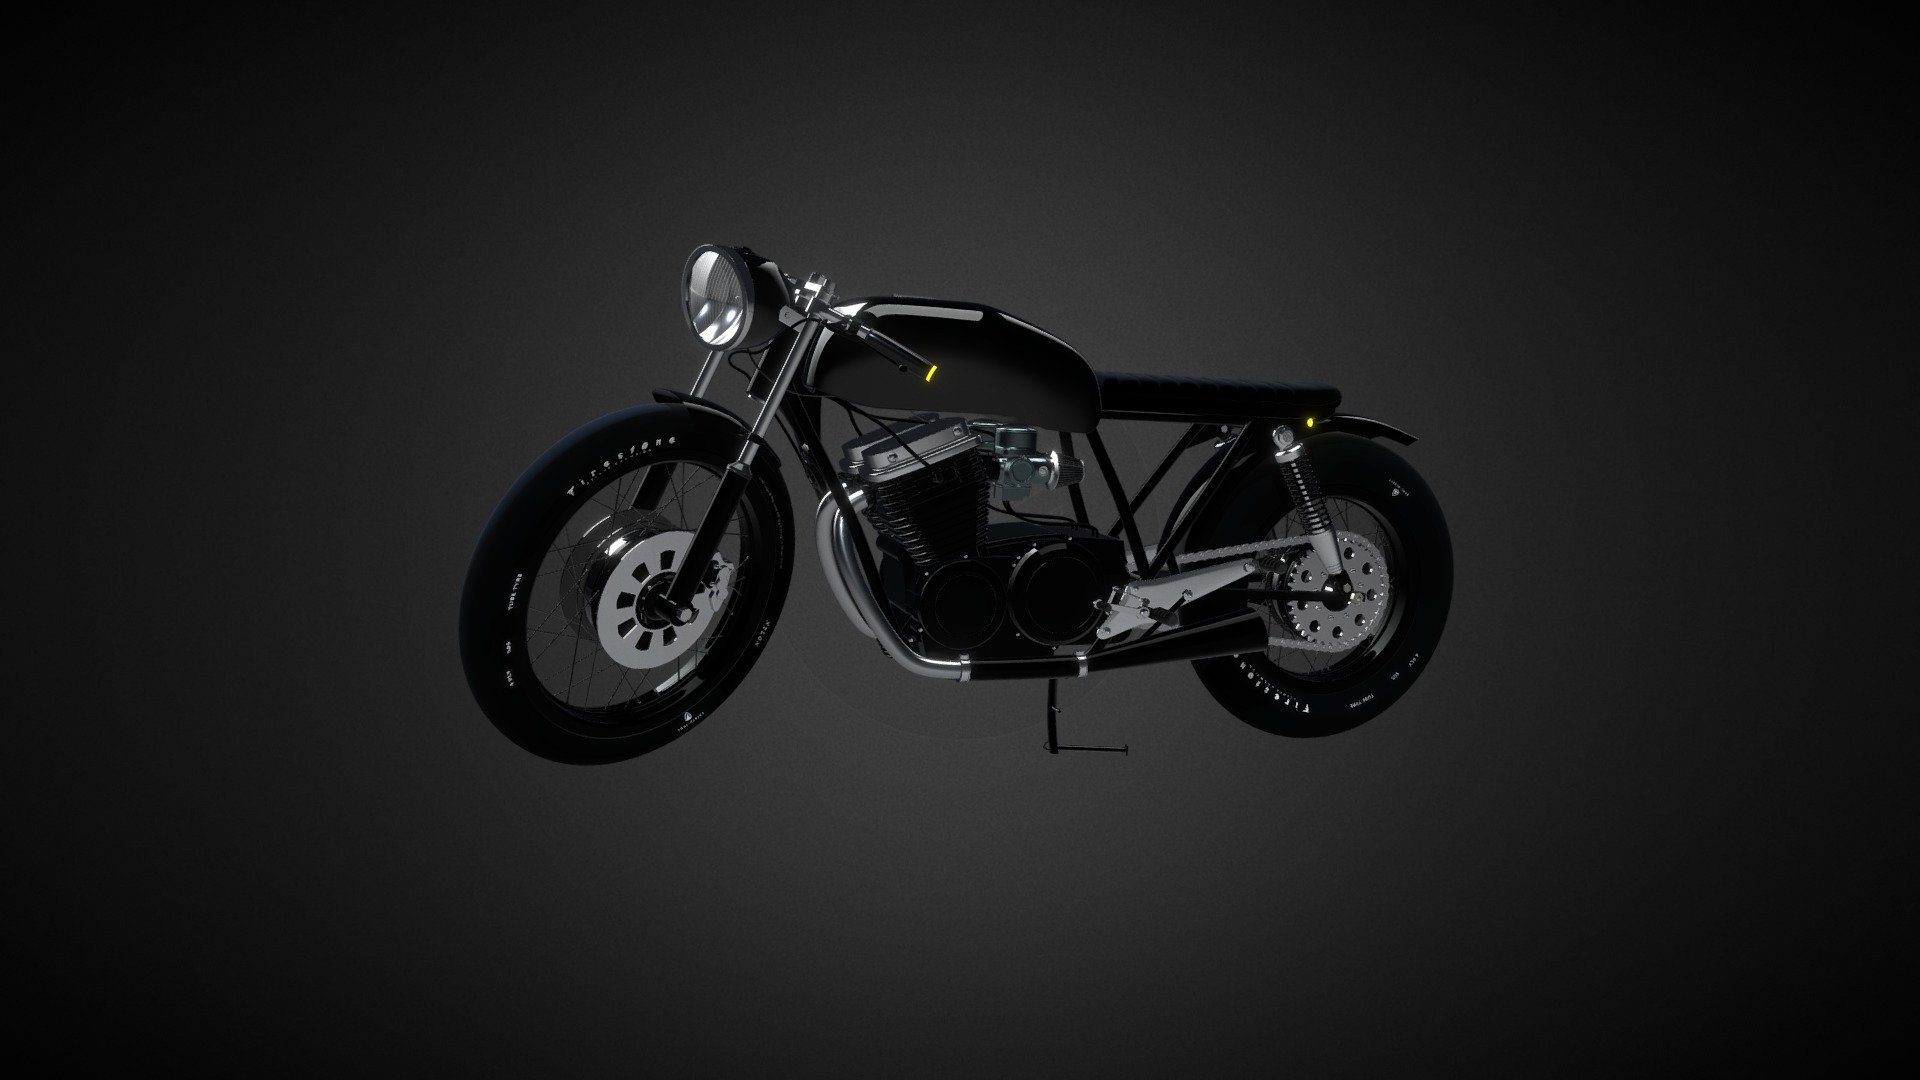 My Cafe Racer - Cafe Race Brat Style Motorcycle - Buy Royalty Free 3D model by danielmikulik 3d model